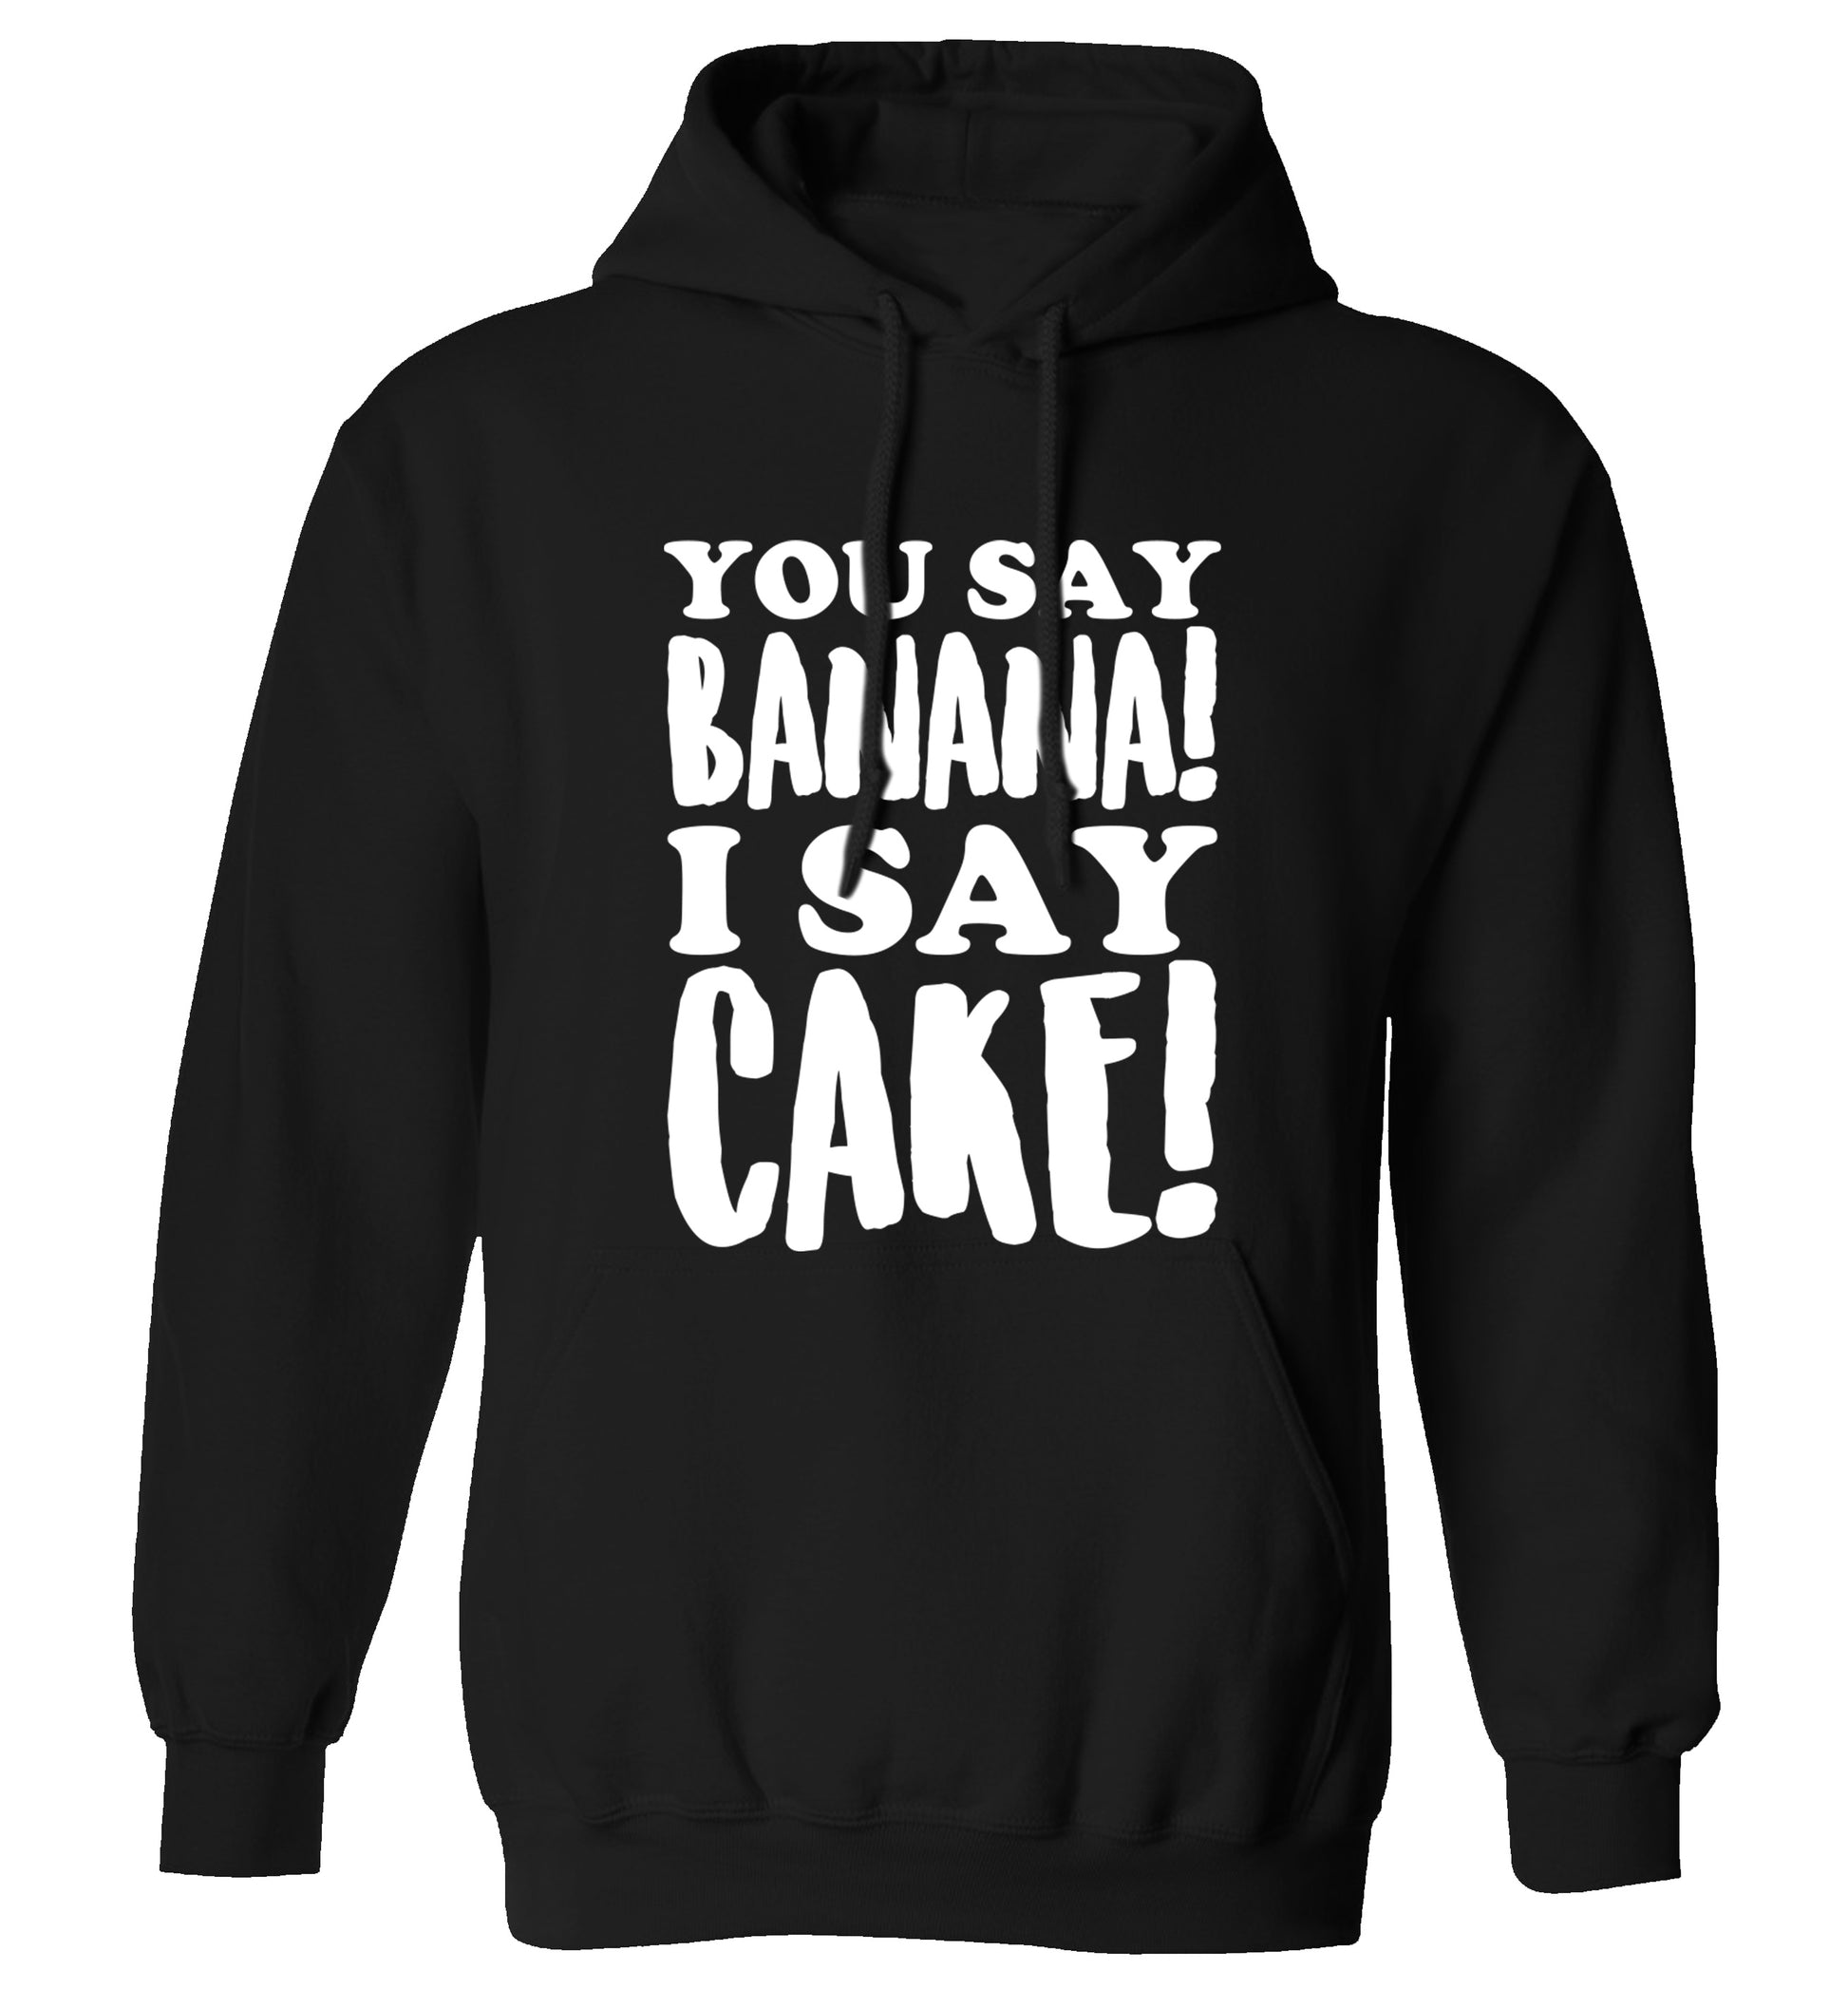 You say banana I say cake! adults unisex black hoodie 2XL